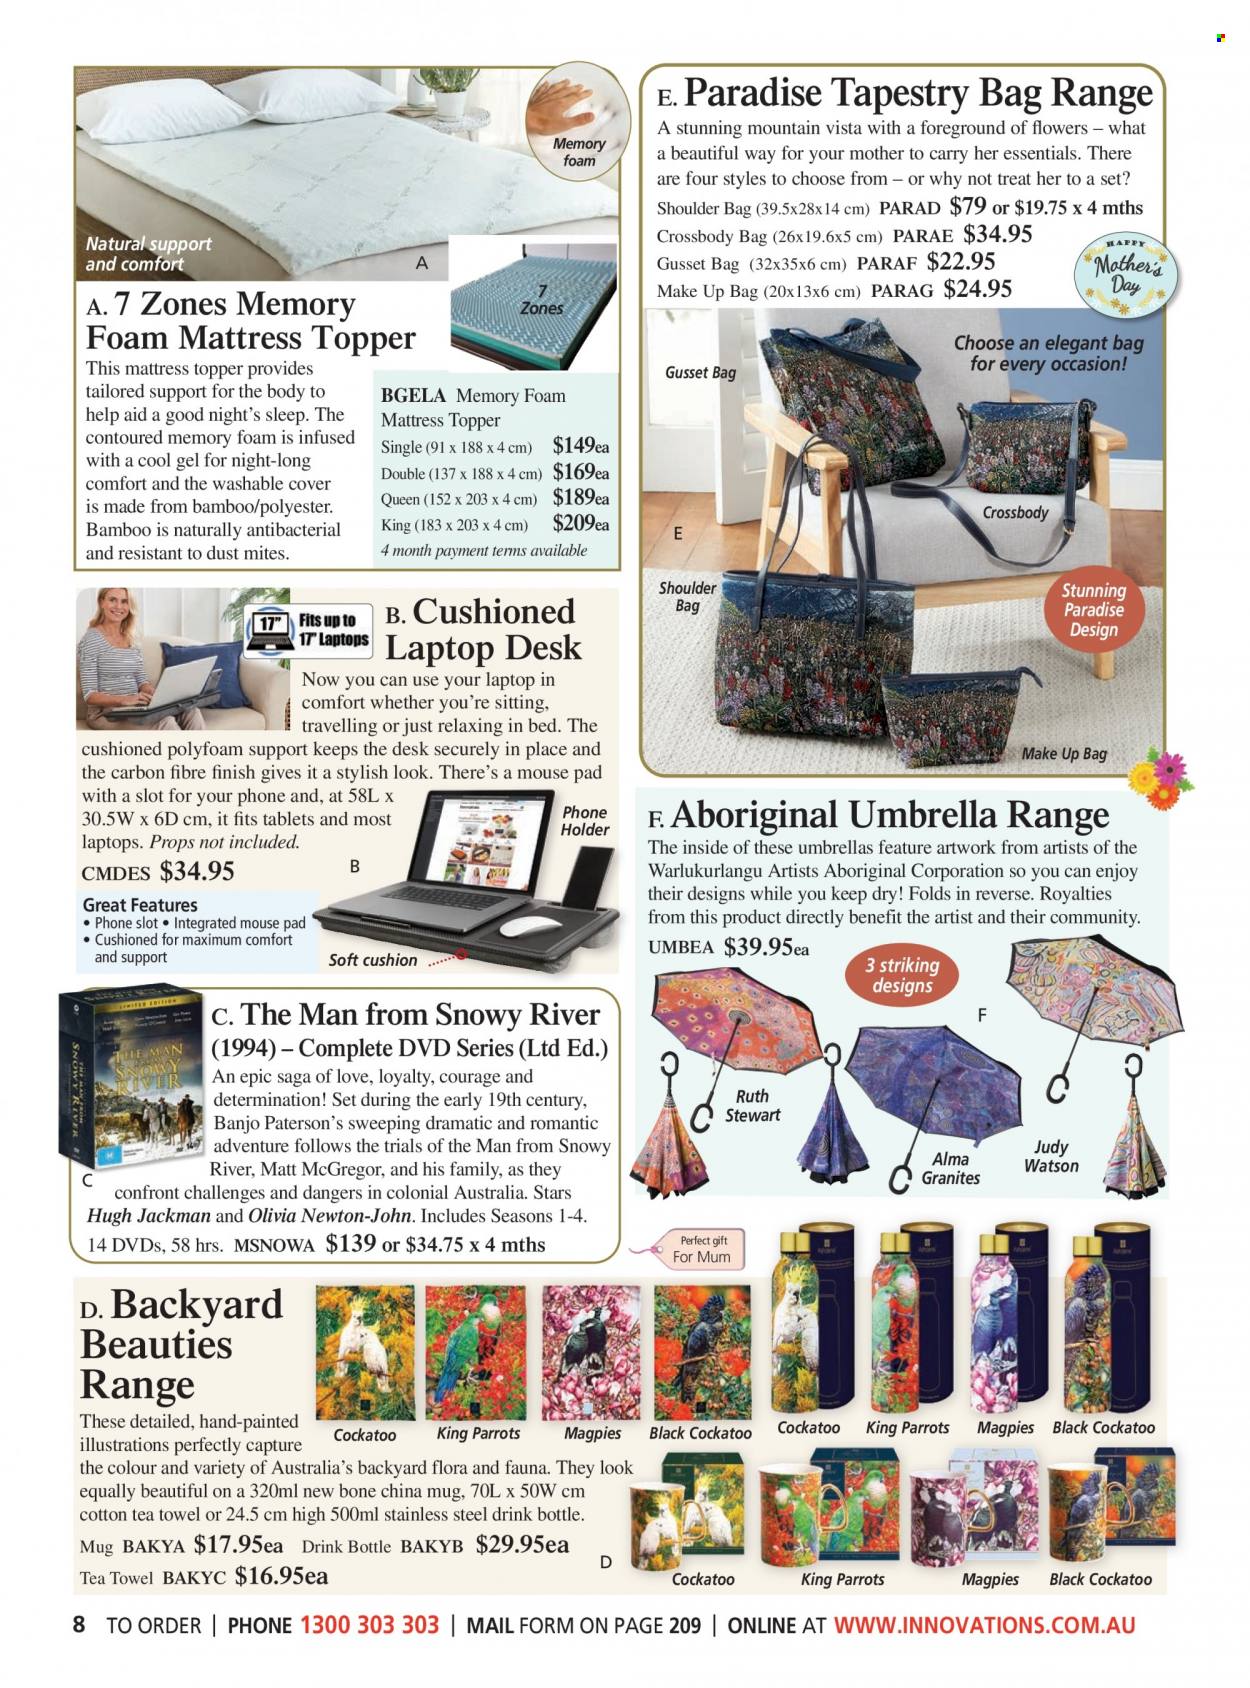 thumbnail - Innovations Catalogue - Sales products - mug, drink bottle, DVD, banjo, tea towels, cushion, tapestry, topper, mattress protector, mouse, cross body bag, shoulder bag, umbrella. Page 8.